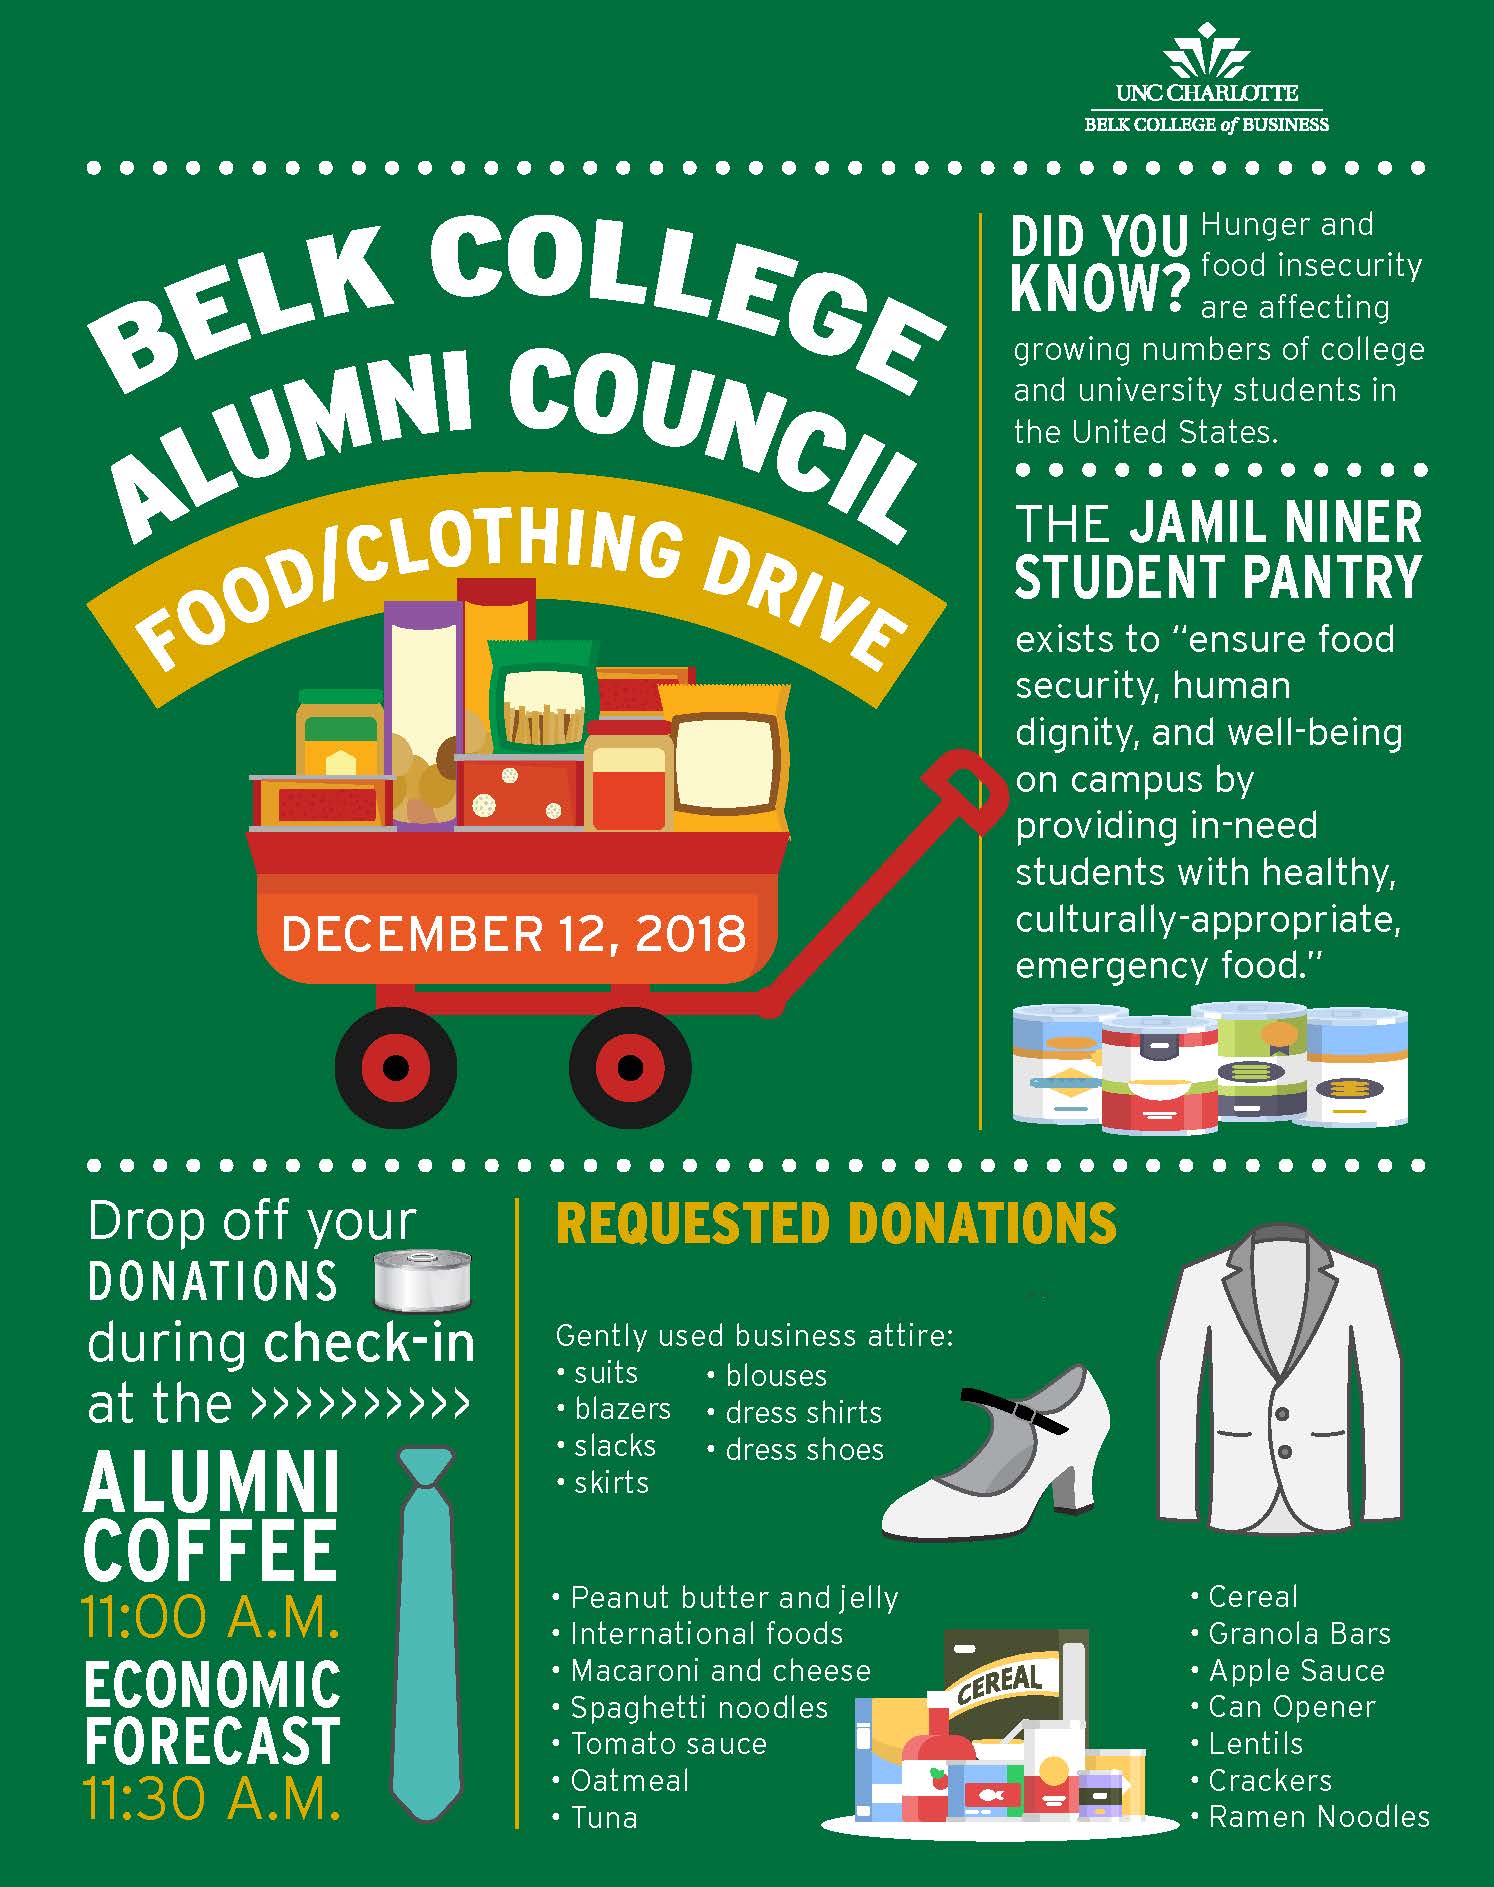 Belk College Alumni Council Food/Clothing Drive 